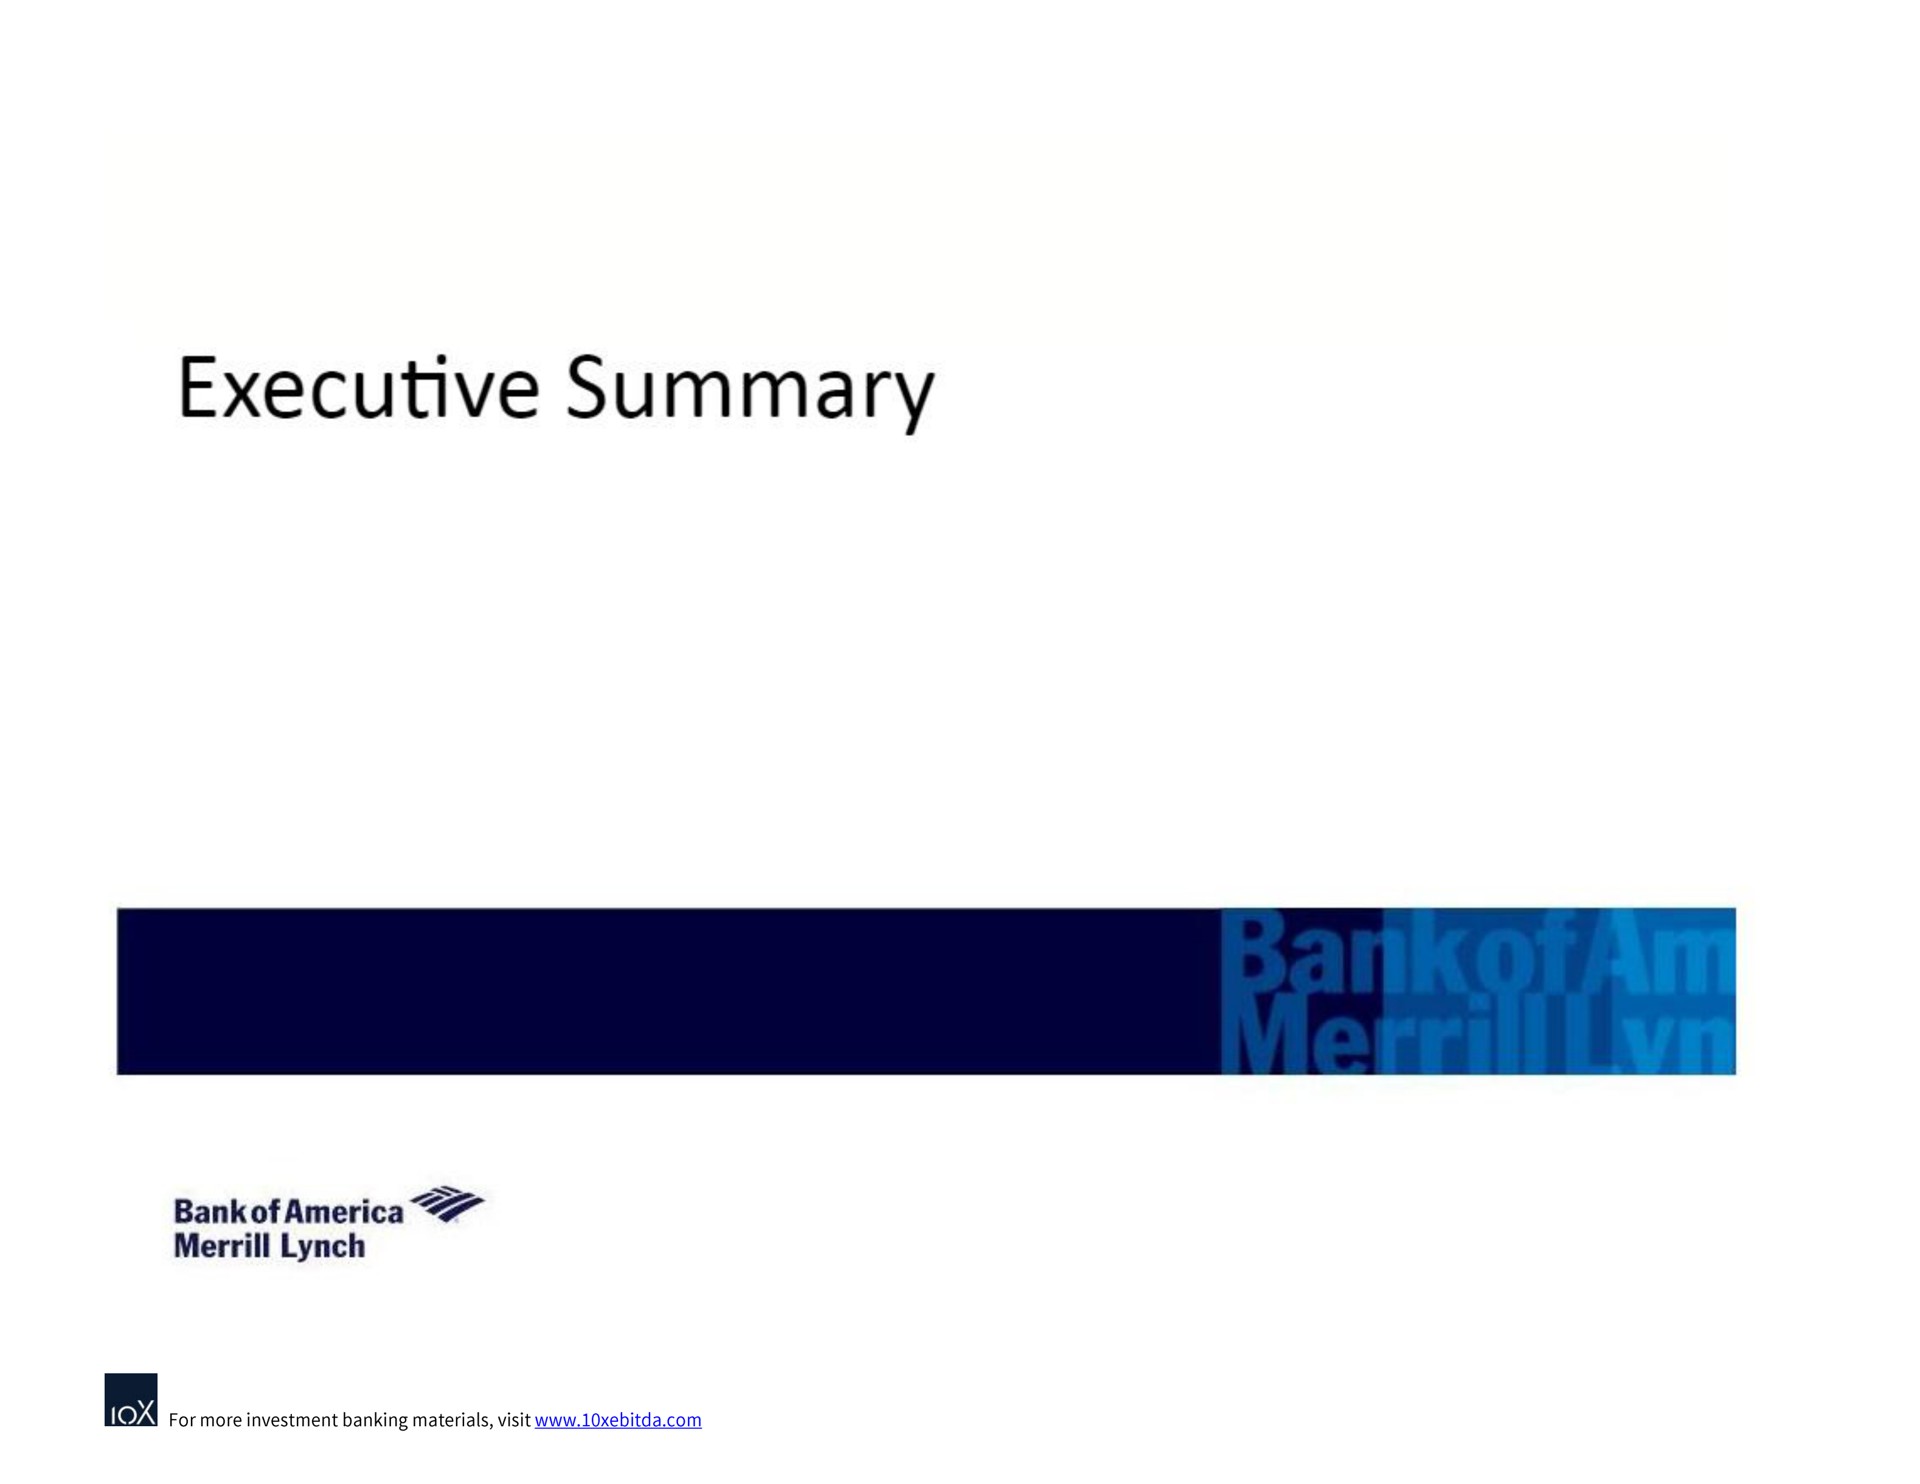 executive summary | Bank of America